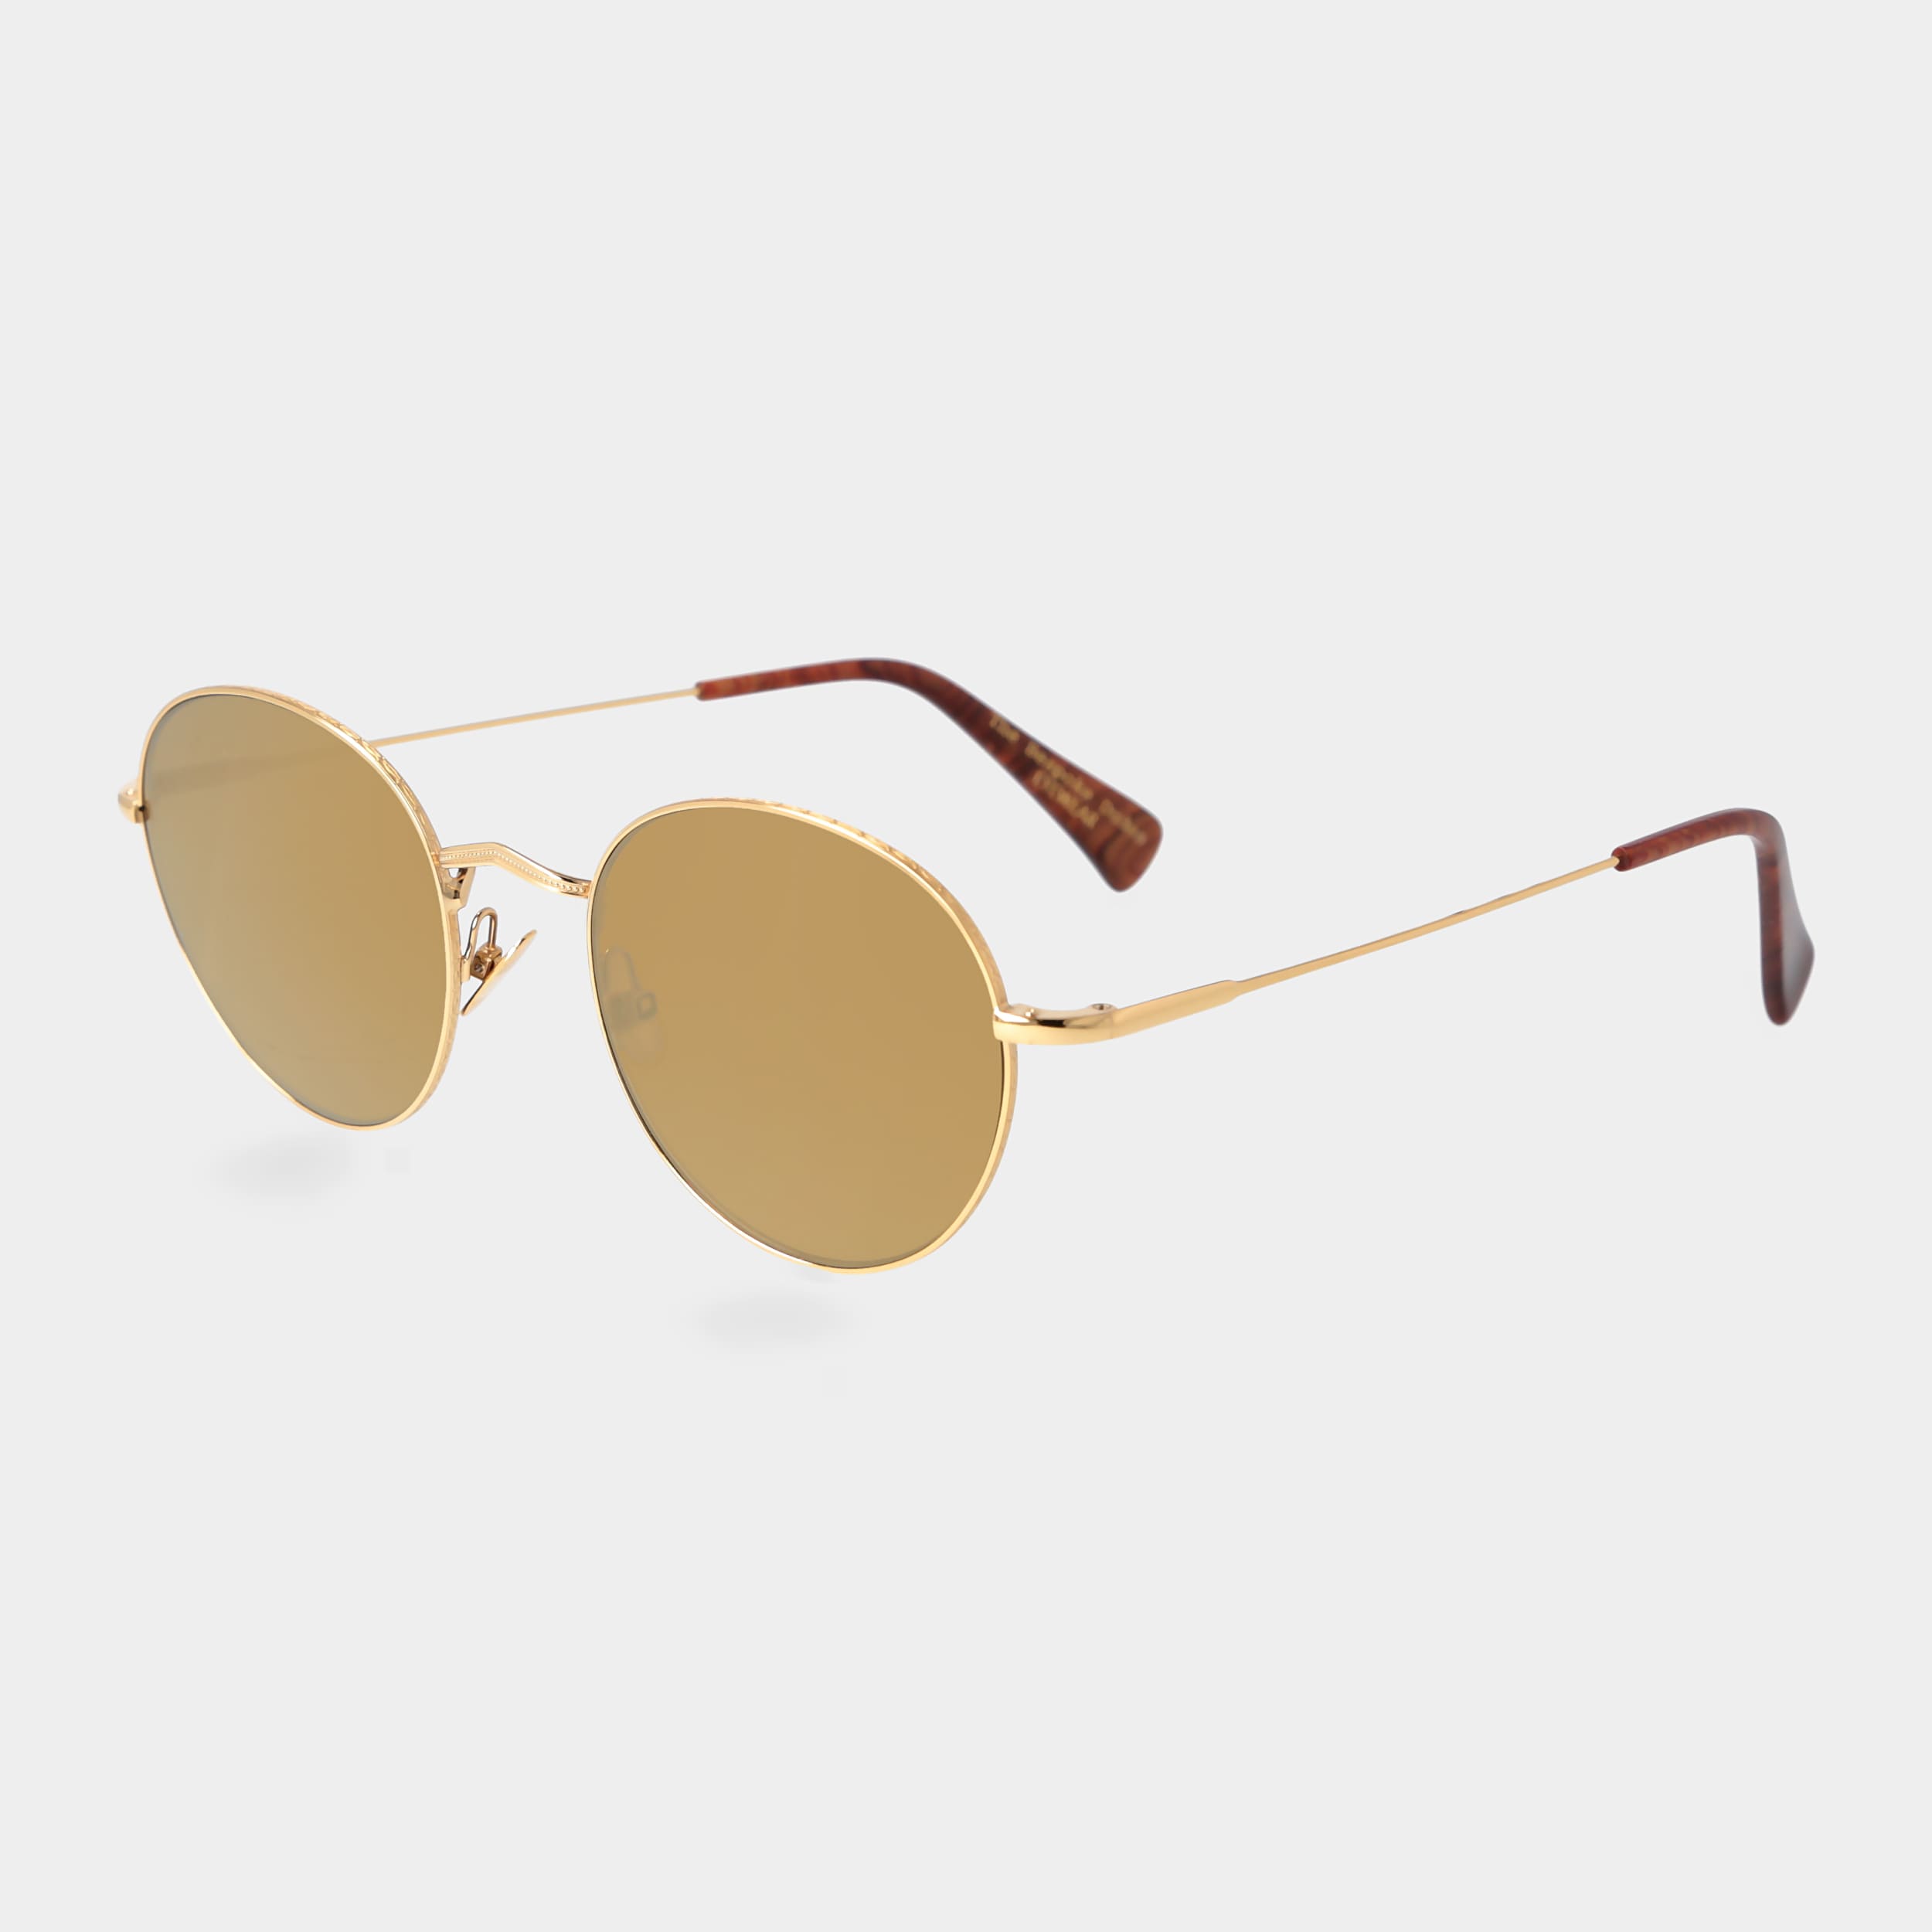 sunglasses-vicuna-k-gold-tobacco-tbd-eyewear-total